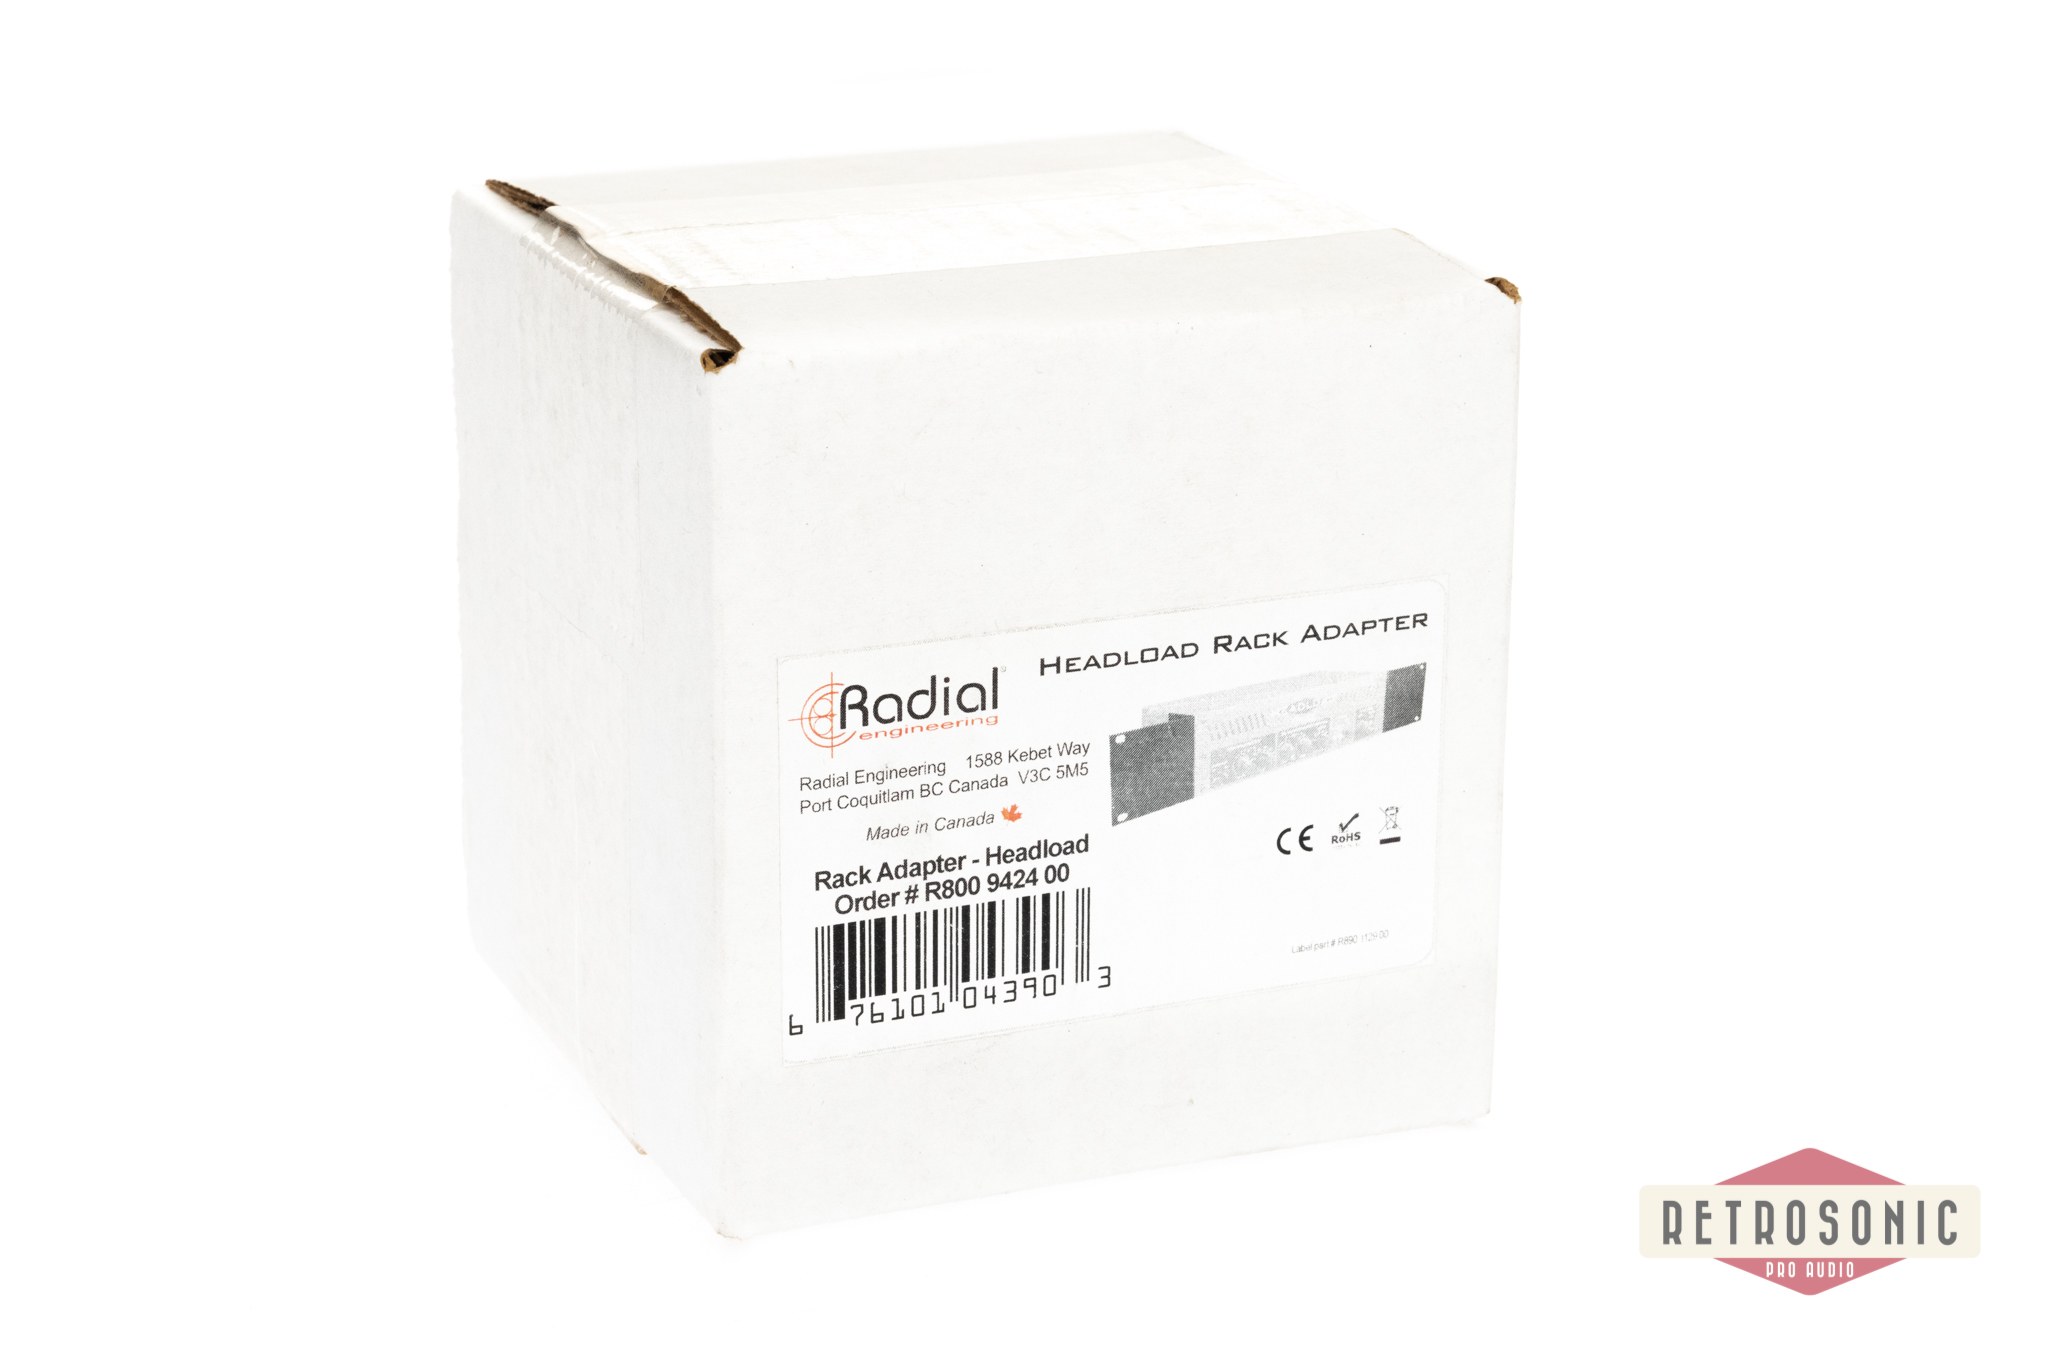 Radial Headload Rack Adapter R800942400